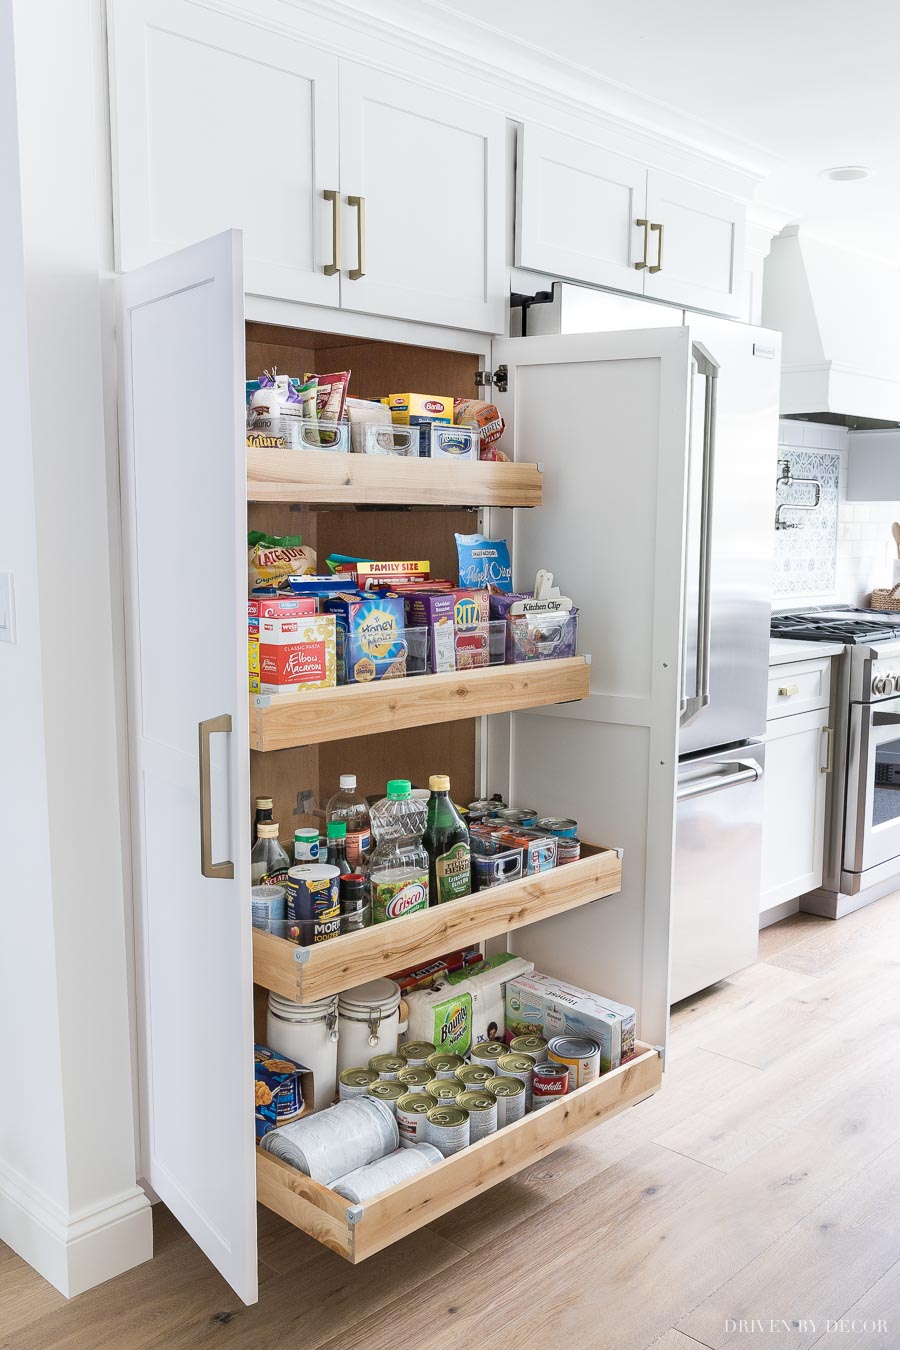 https://www.drivenbydecor.com/wp-content/uploads/2018/08/kitchen-cabinet-pantry-storage-organization-roll-out-trays.jpg